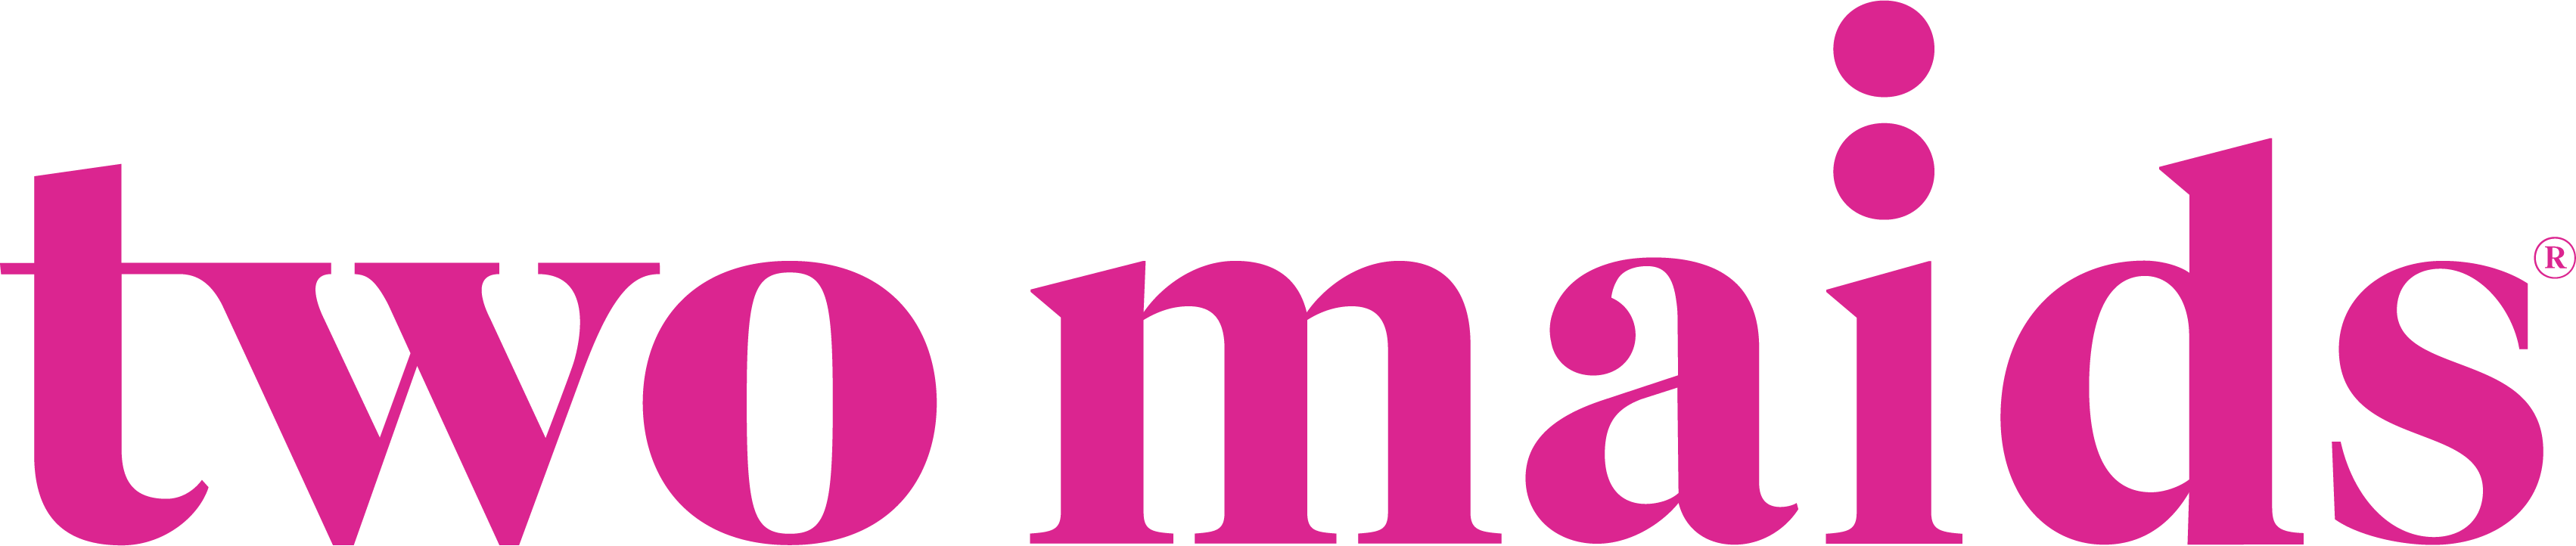 Pink Two Maids logo